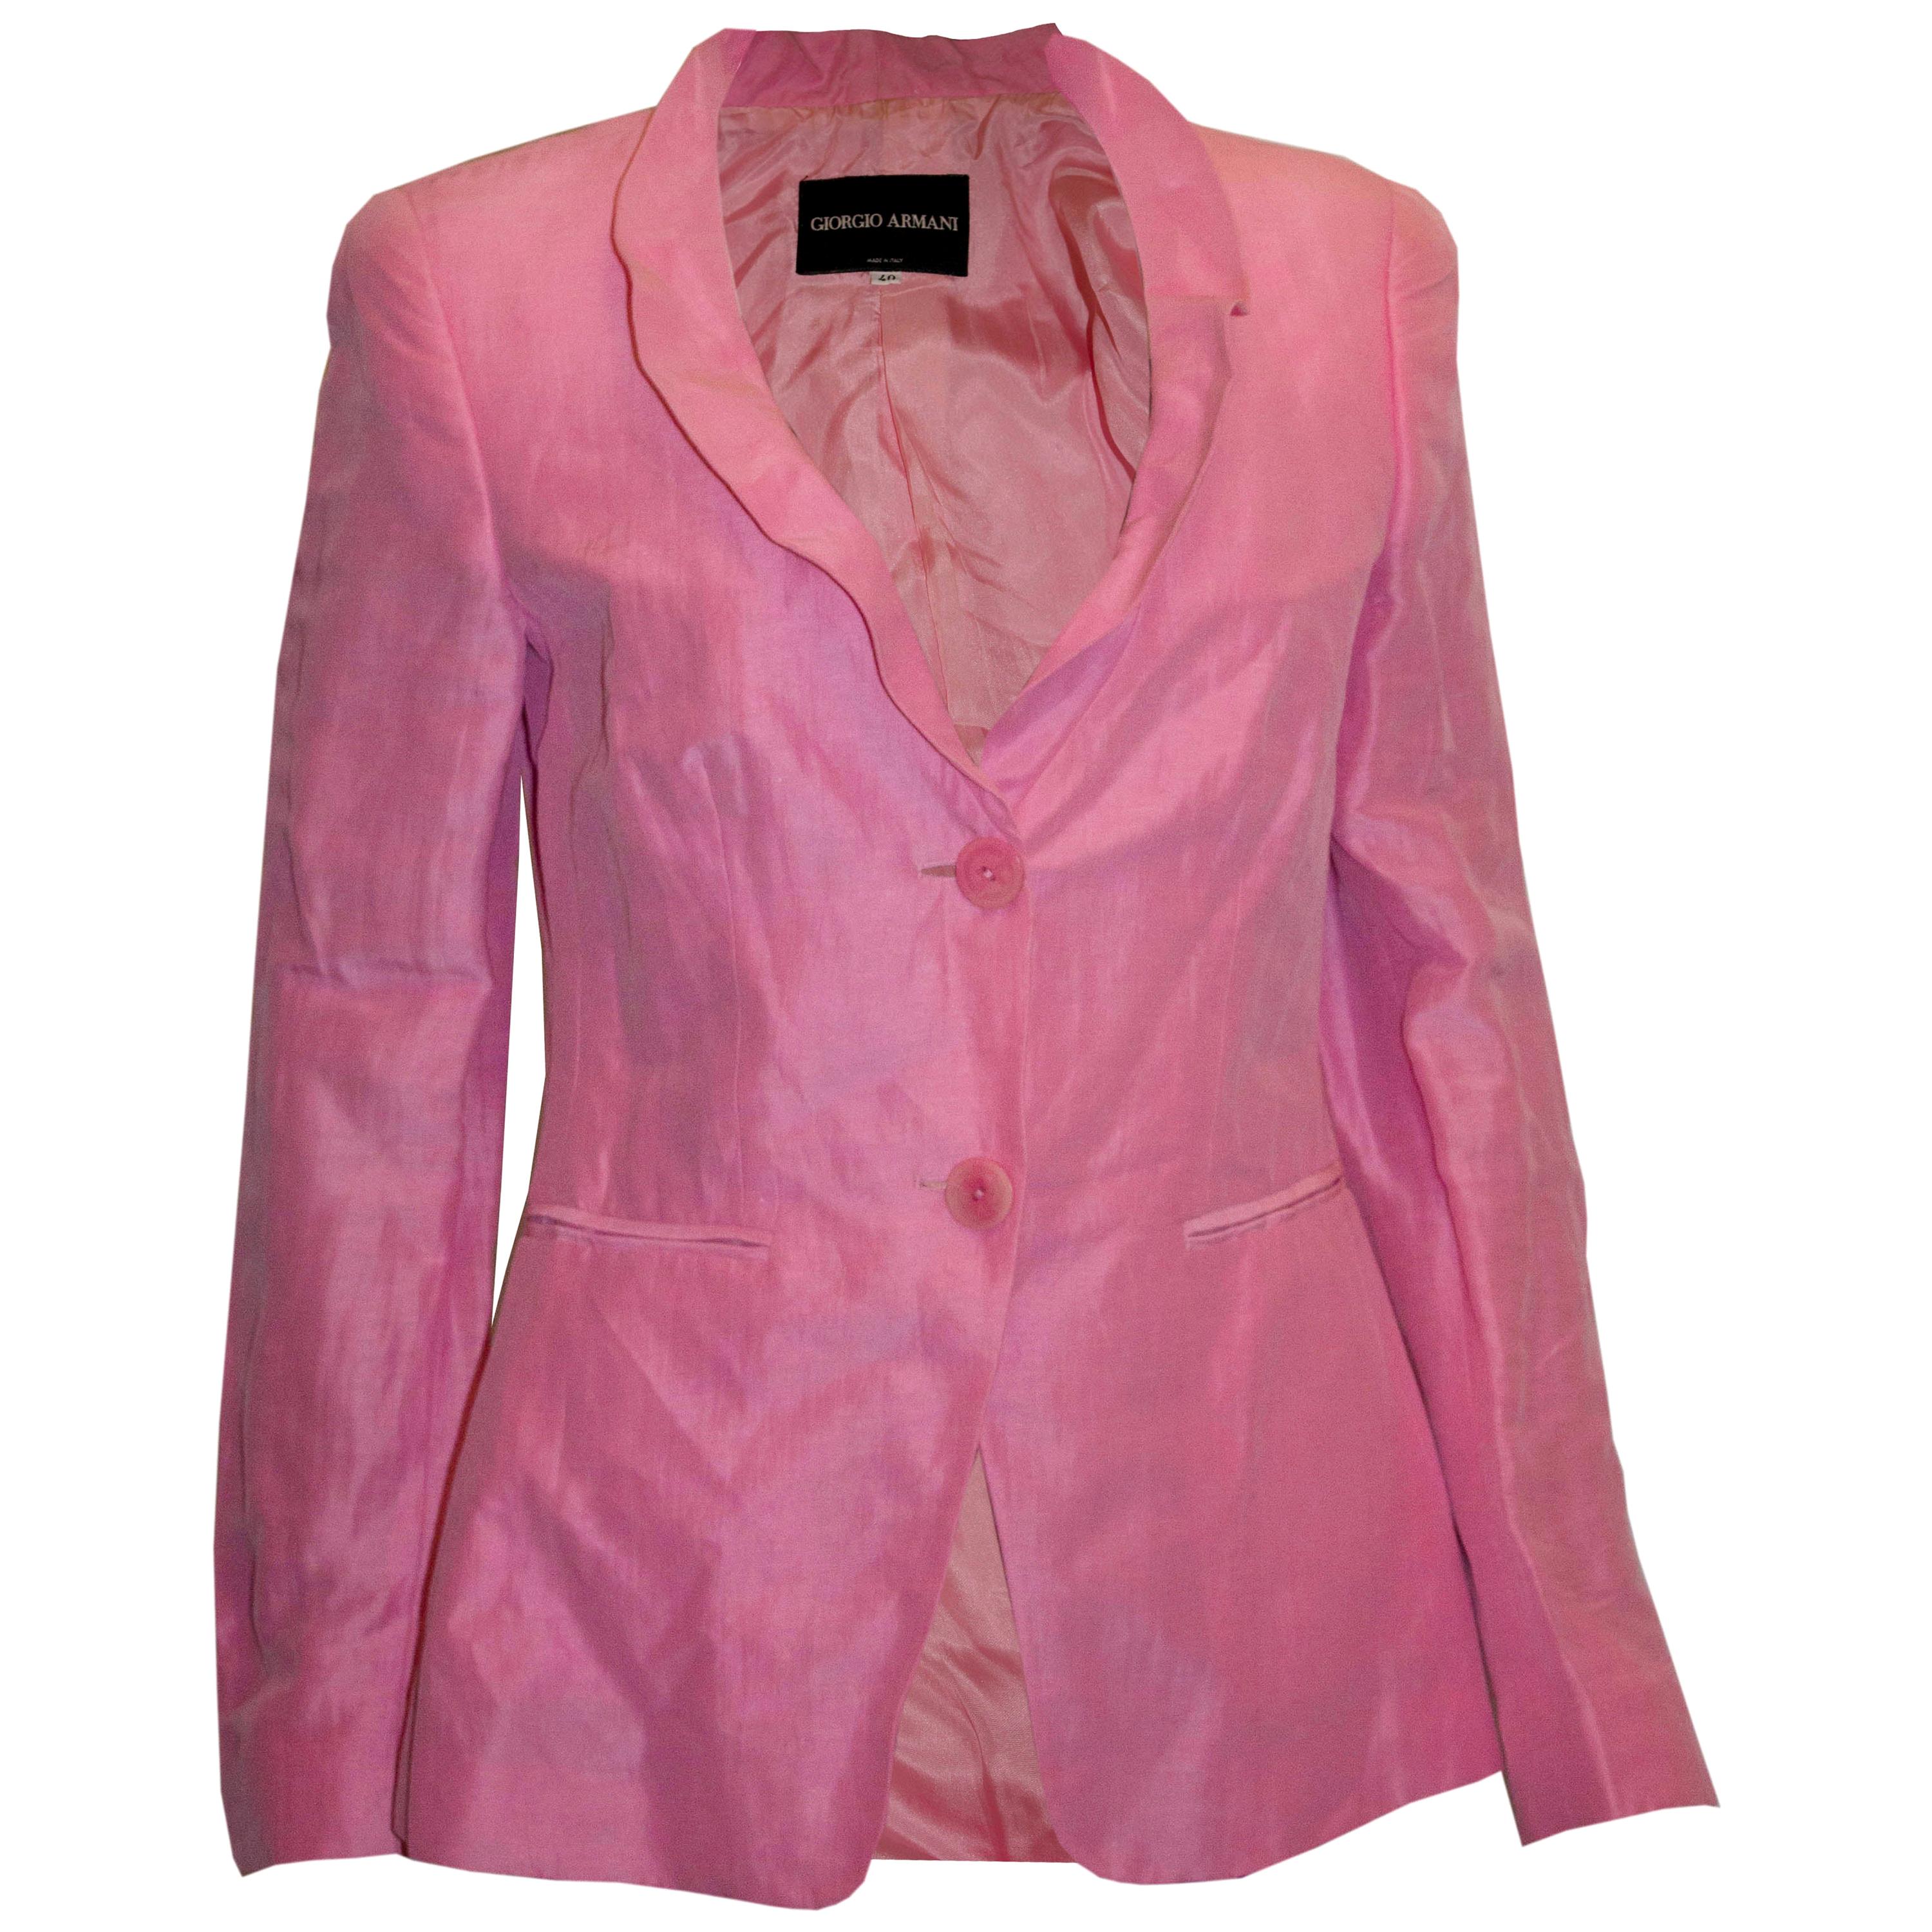 Vintage Giorgio Armani Pink Jacket